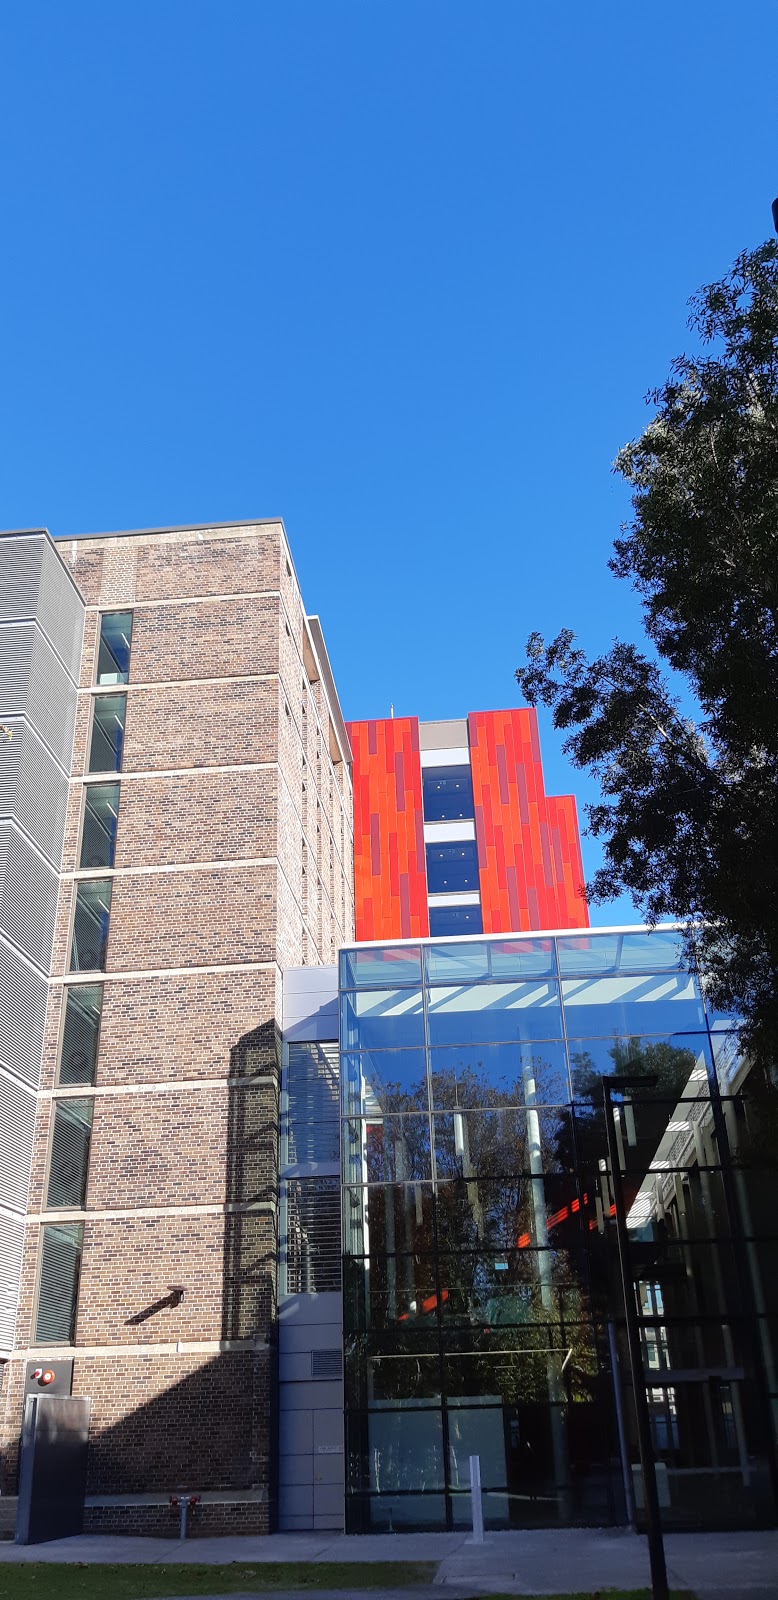 Macquarie University Art Gallery | Faculty of Arts, E11A Building, Eastern Road, Macquarie Park NSW 2109, Australia | Phone: (02) 9850 7437